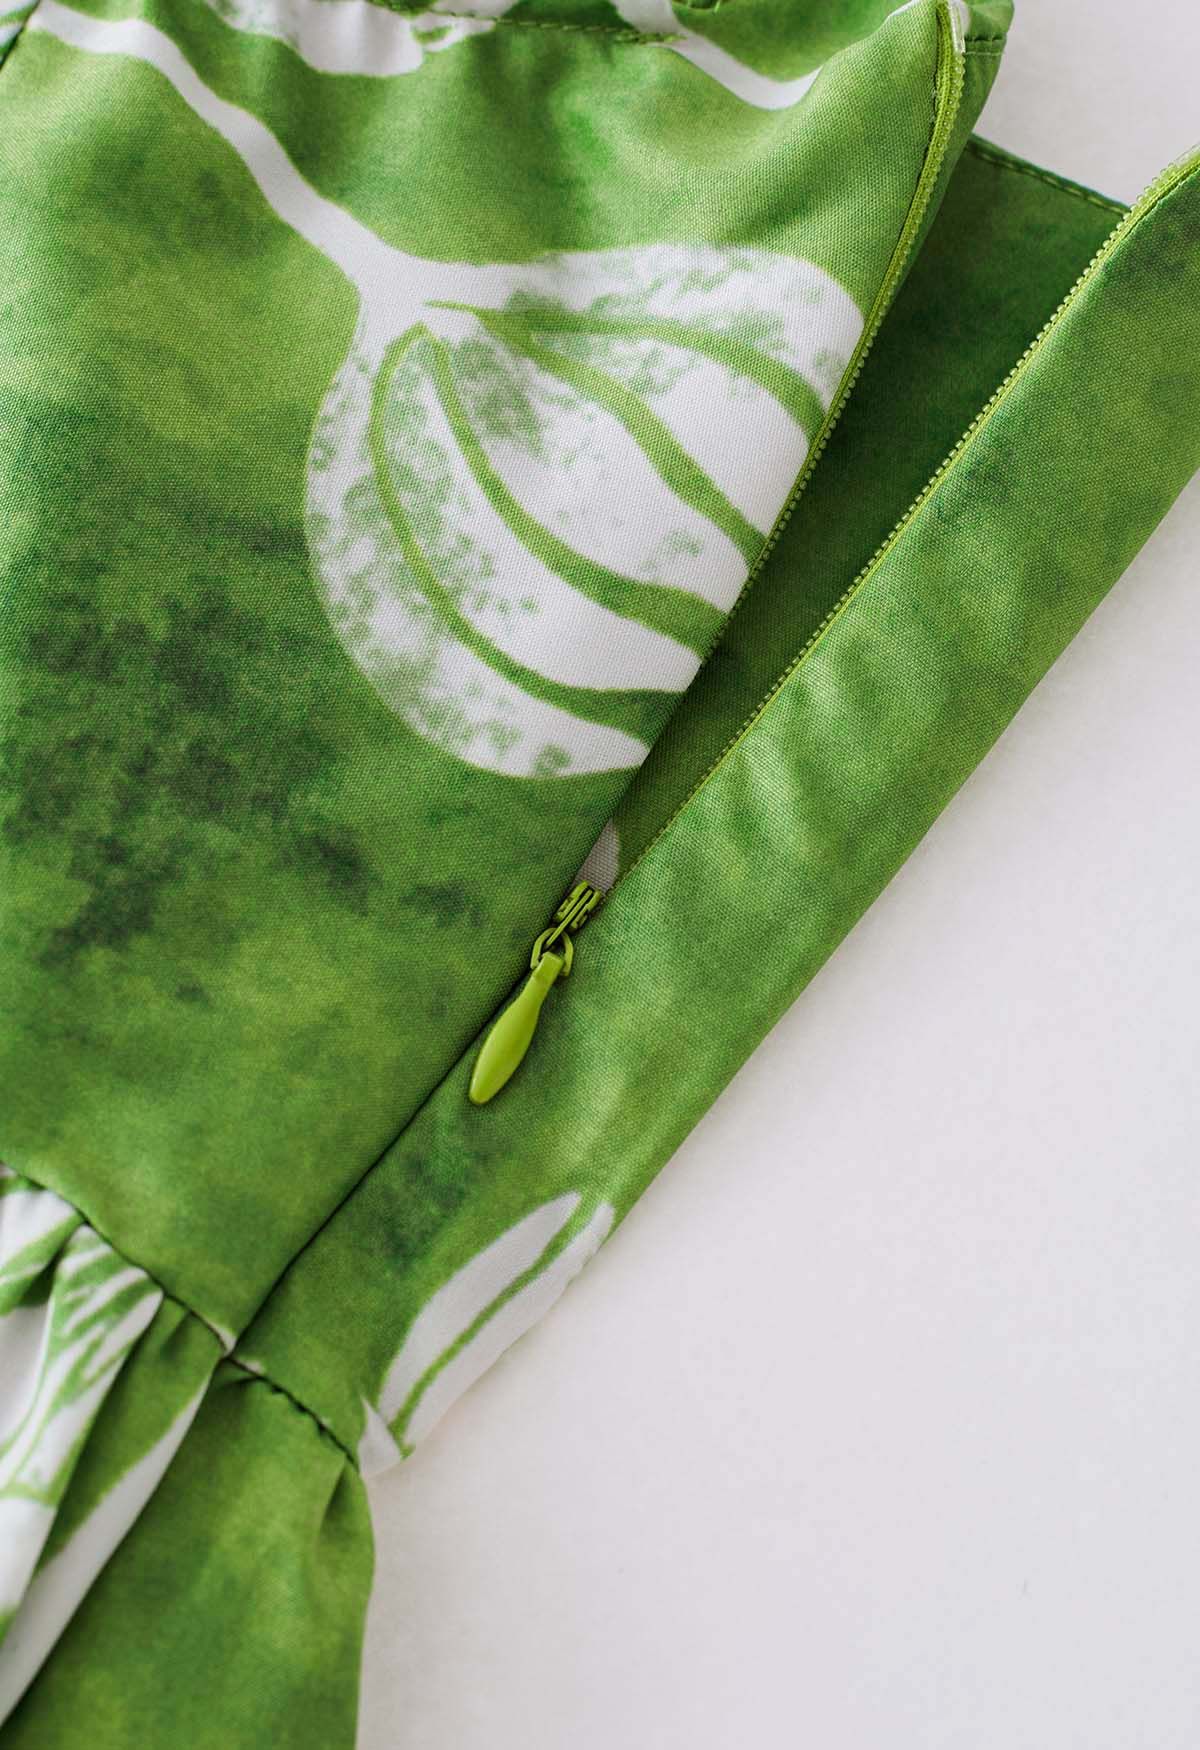 Grünes, mit Zwillingsblütenknospen bedrucktes Cami-Kleid